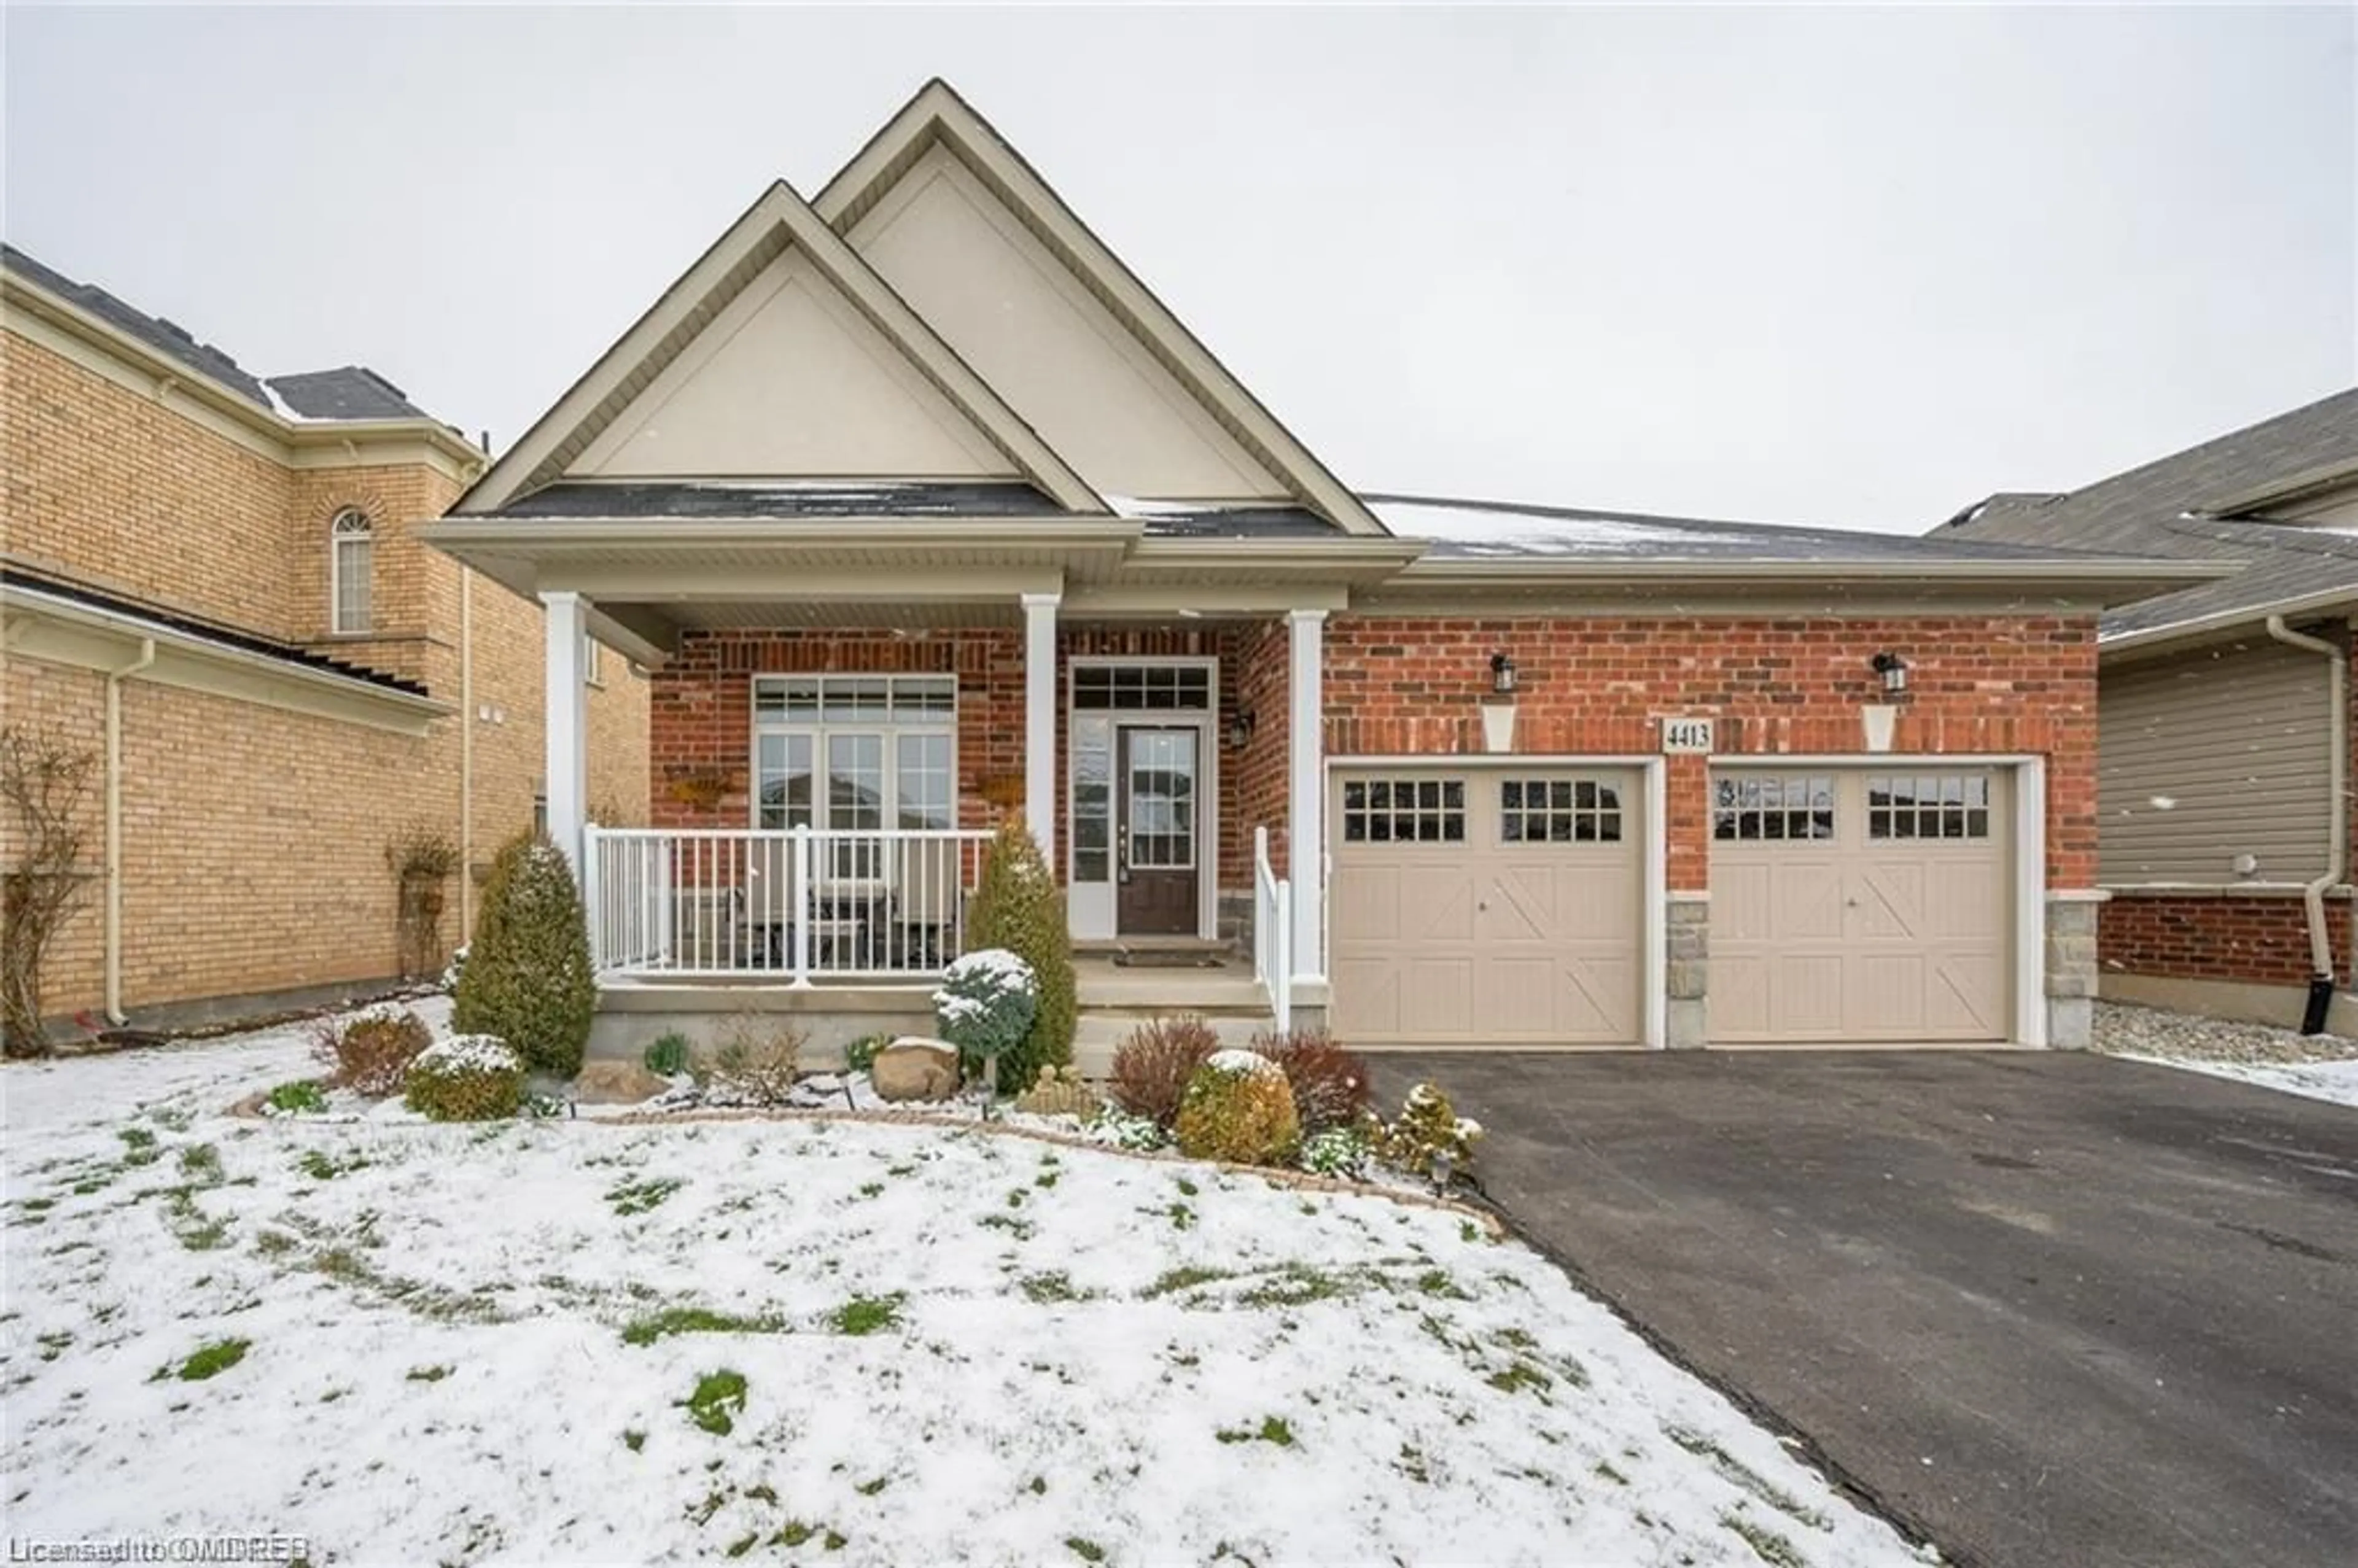 Home with brick exterior material for 4413 Mann Street St, Niagara Falls Ontario L2G 0E8